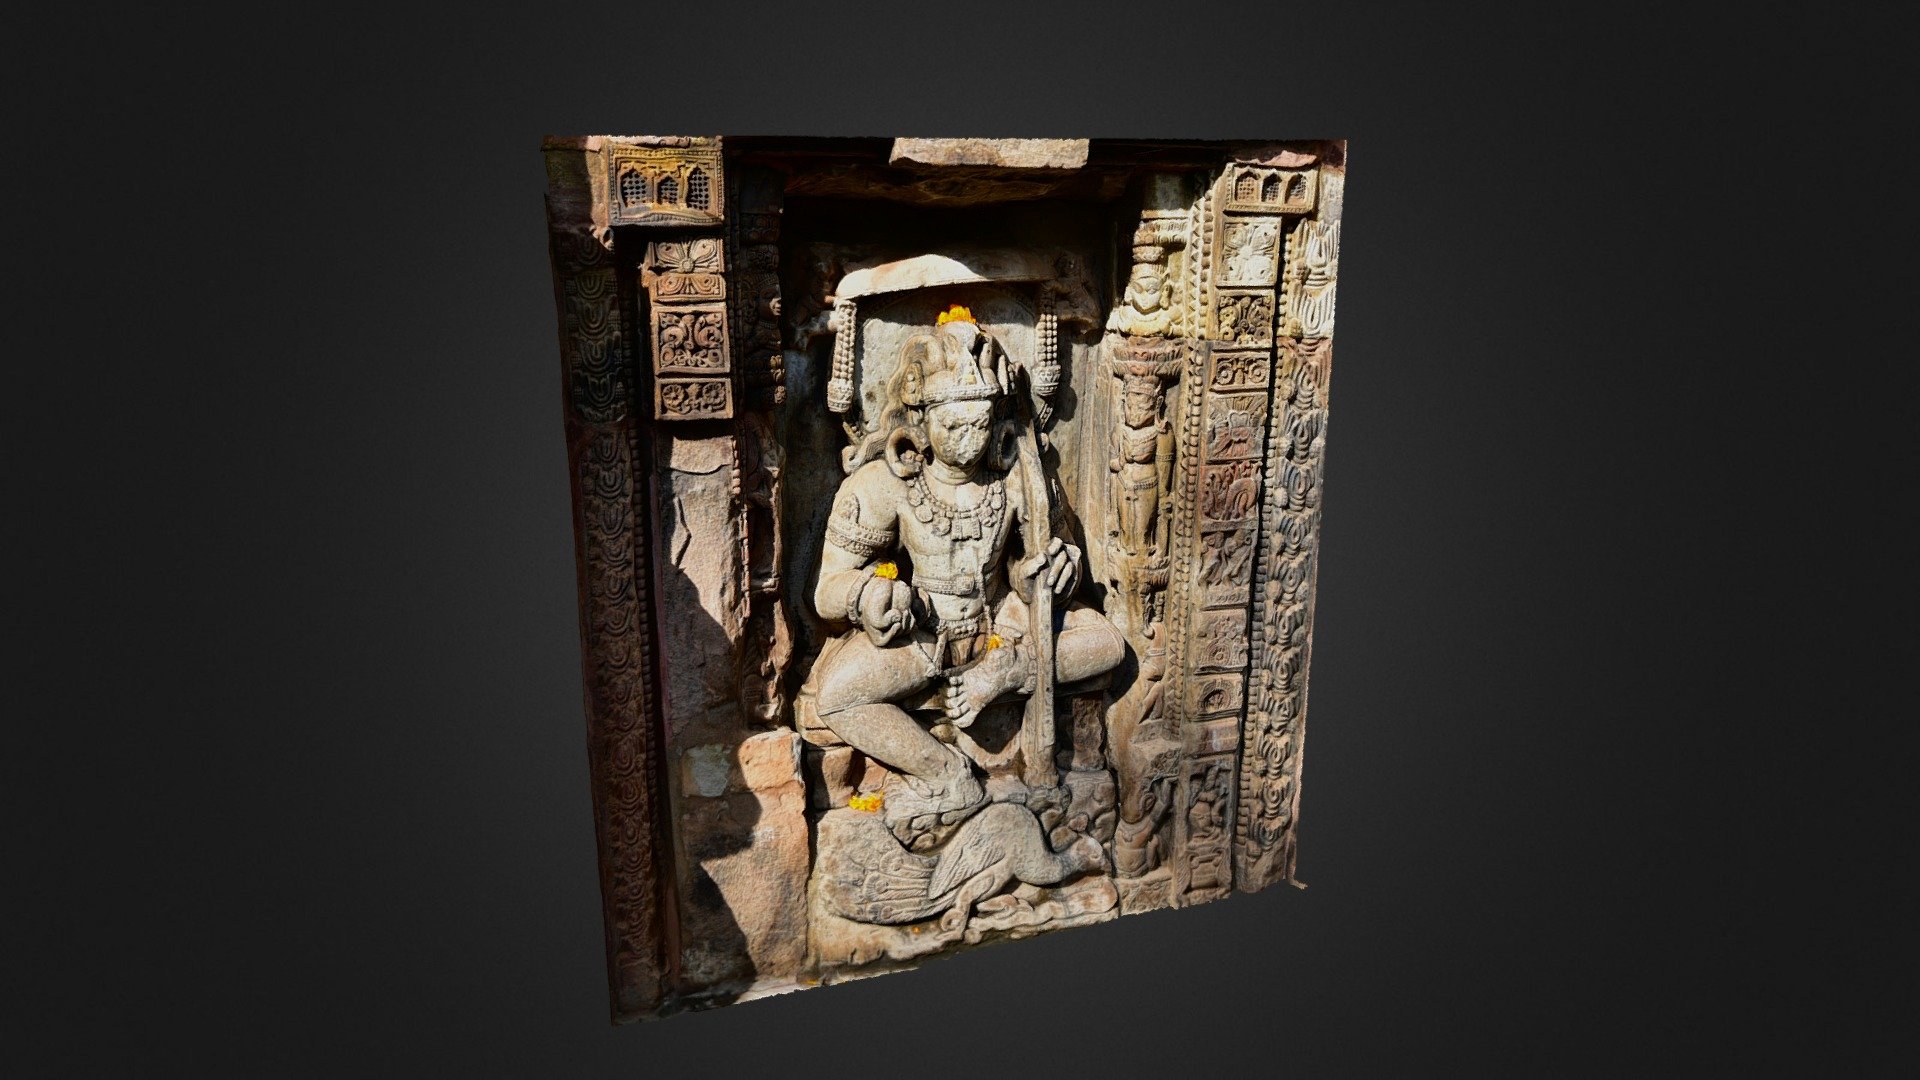 7th-century Kartikeya sculpture from Parasurameswara Temple, Bhubaneswar, Odisha, India. Shailodbhava period, in parswadebata niche. Scanned by Debendra Pattanayak and Prateek Pattanaik. 

Preliminary version of this model 3d model